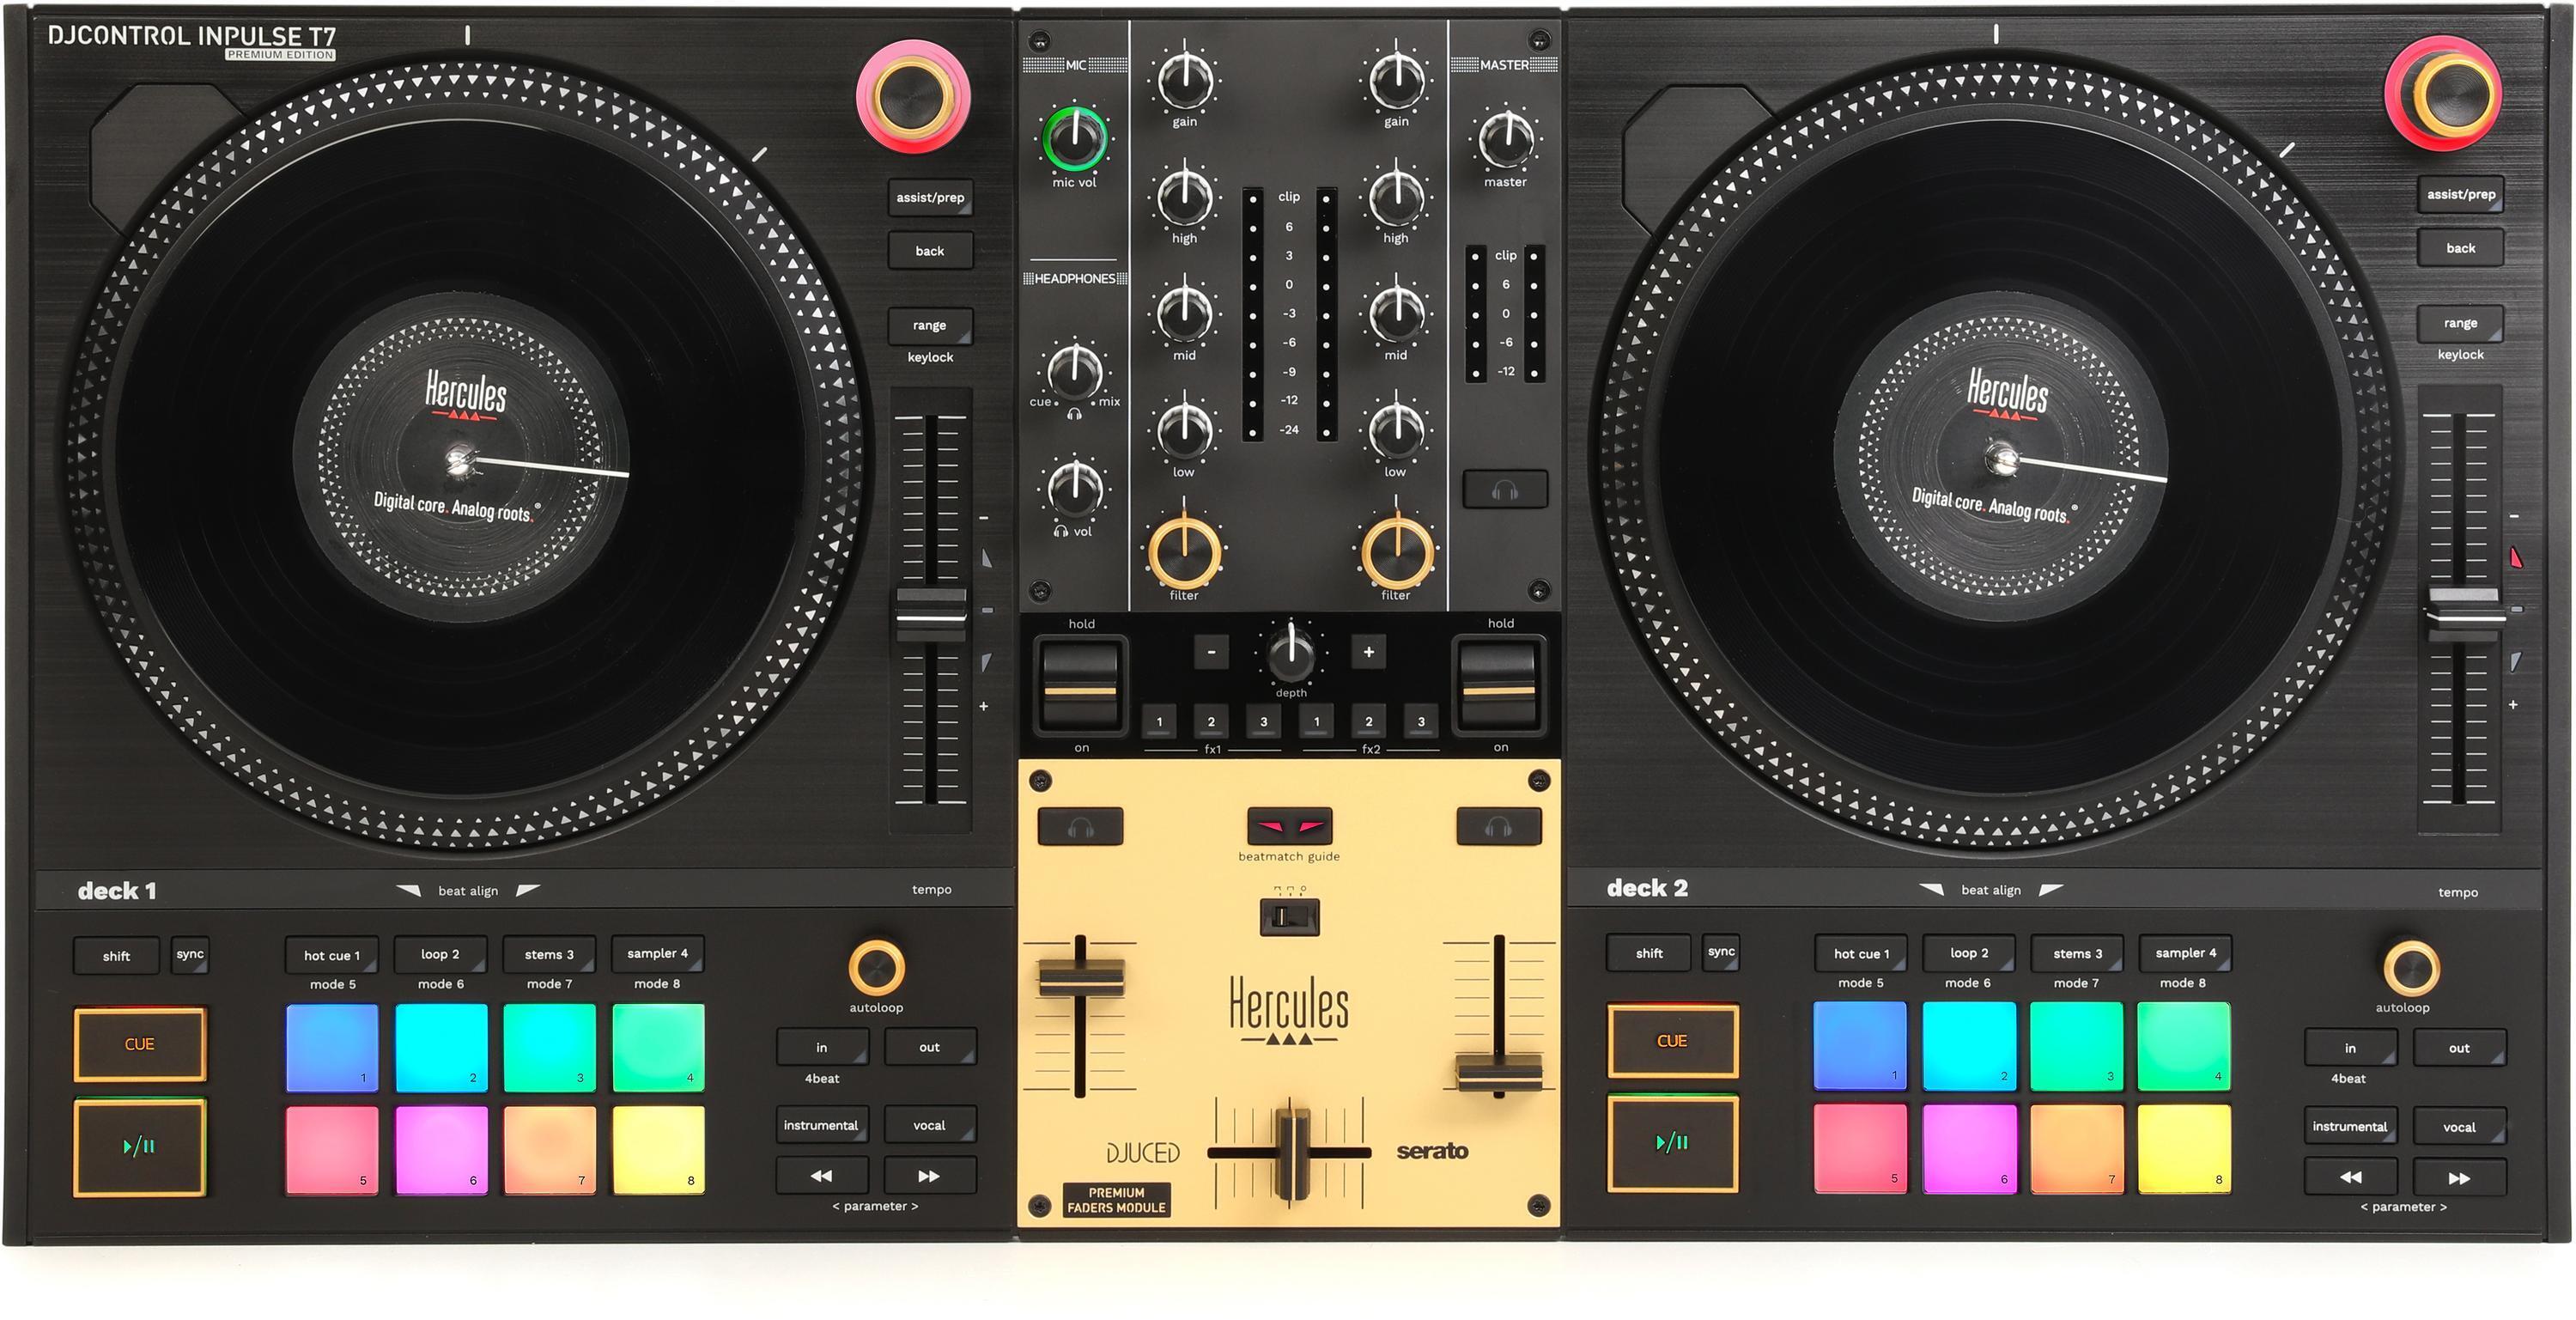 Hercules DJControl Inpulse T7 2-deck Motorized DJ Controller Black  AMS-DJC-INPULSE-T7 - Best Buy